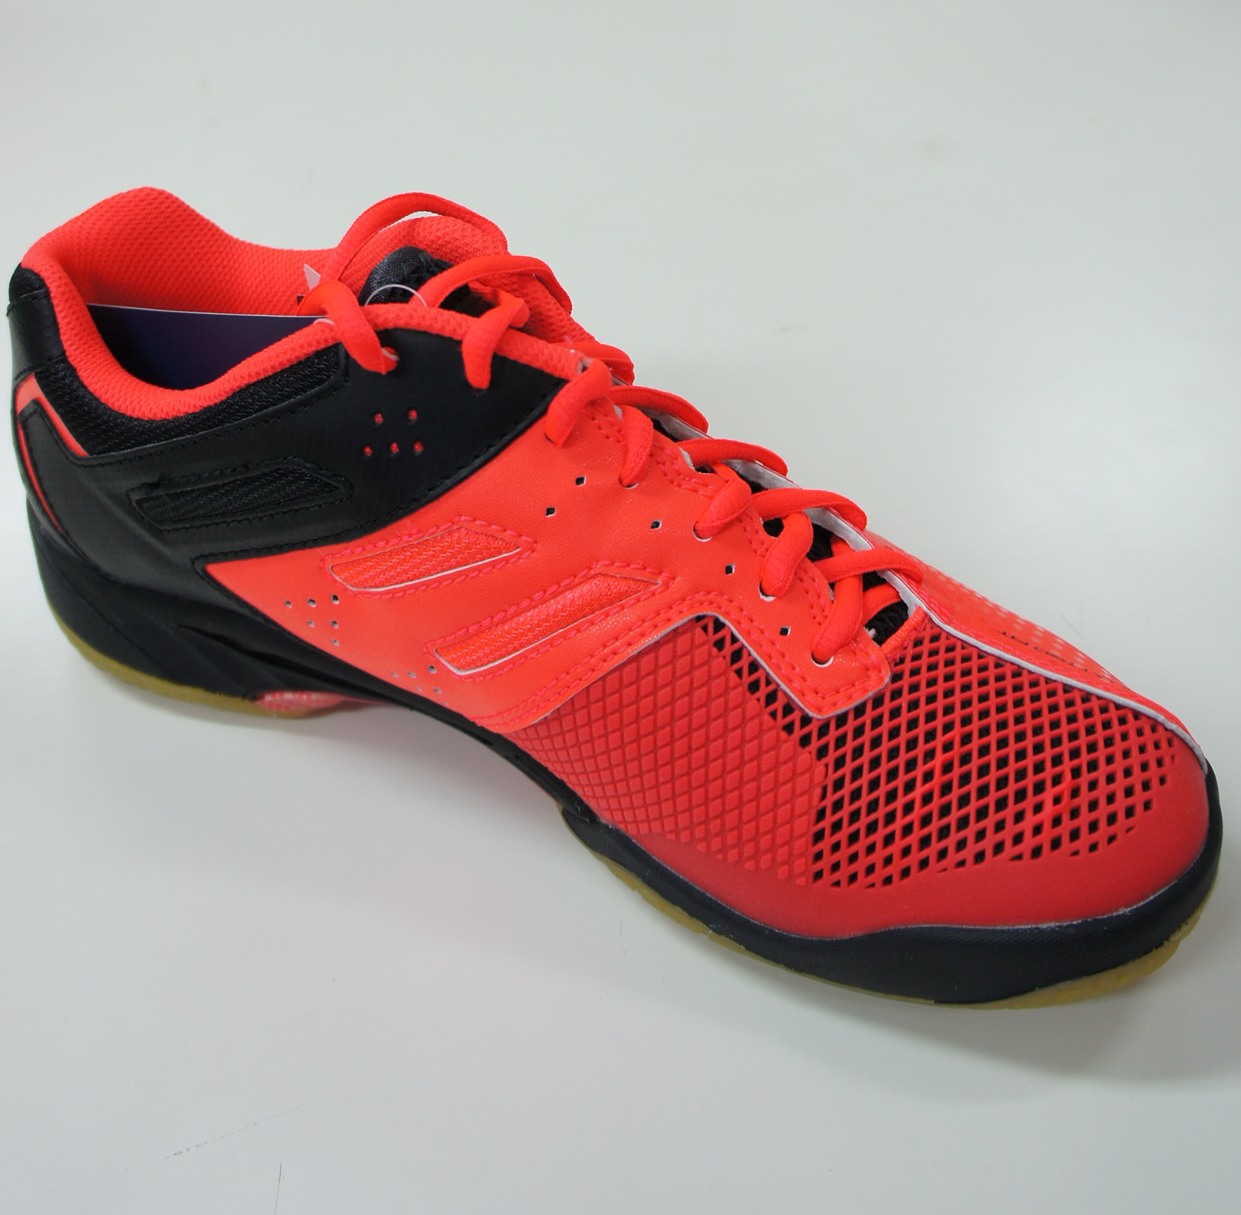 2015 Yonex SHB-02LTD Limited Edition Badminton Shoes 7.5 